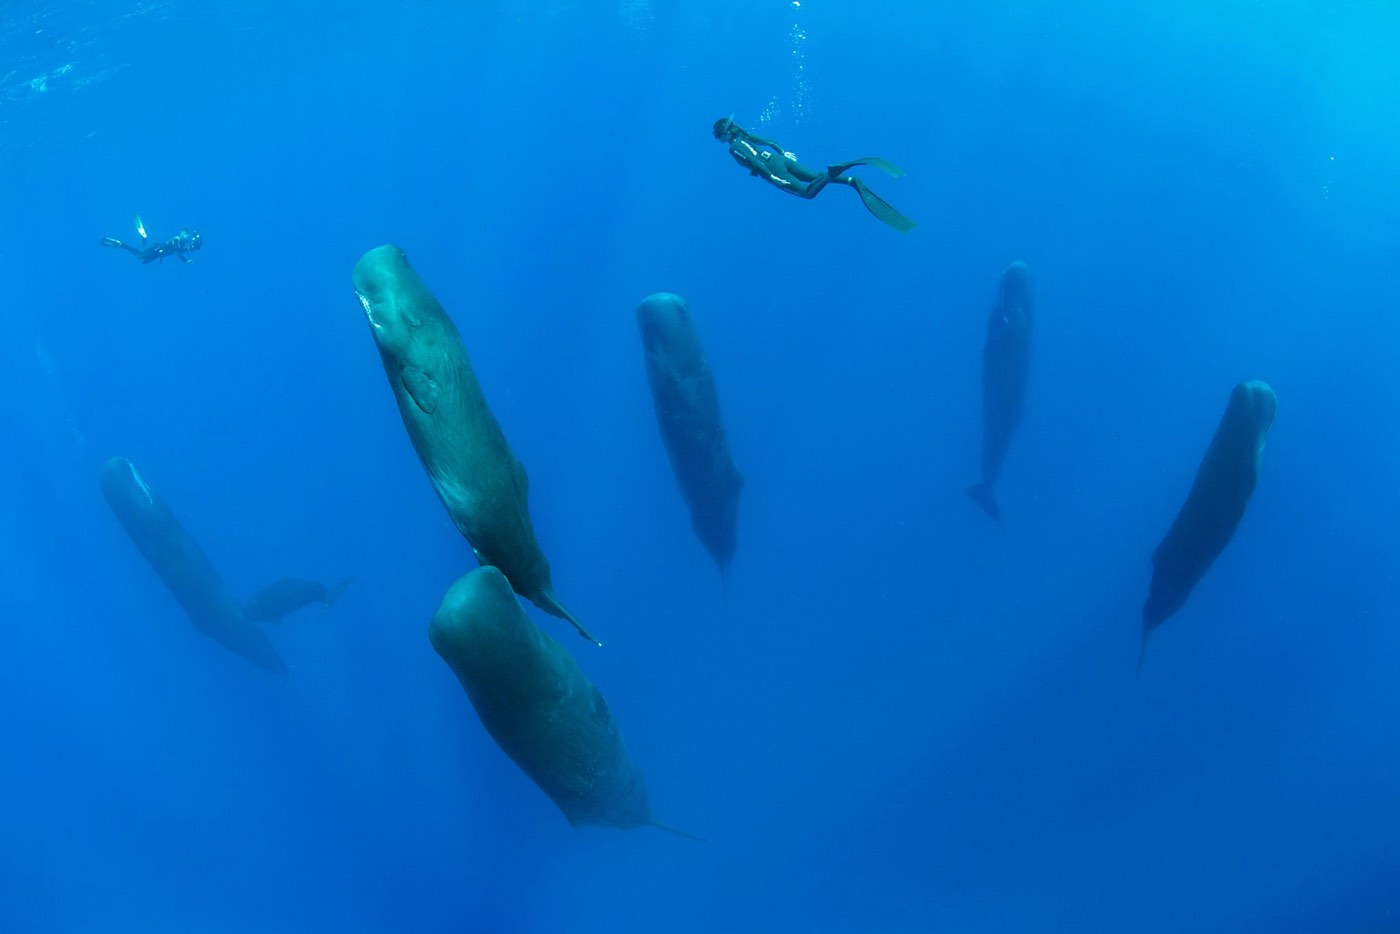 Sleeping Sperm Whales